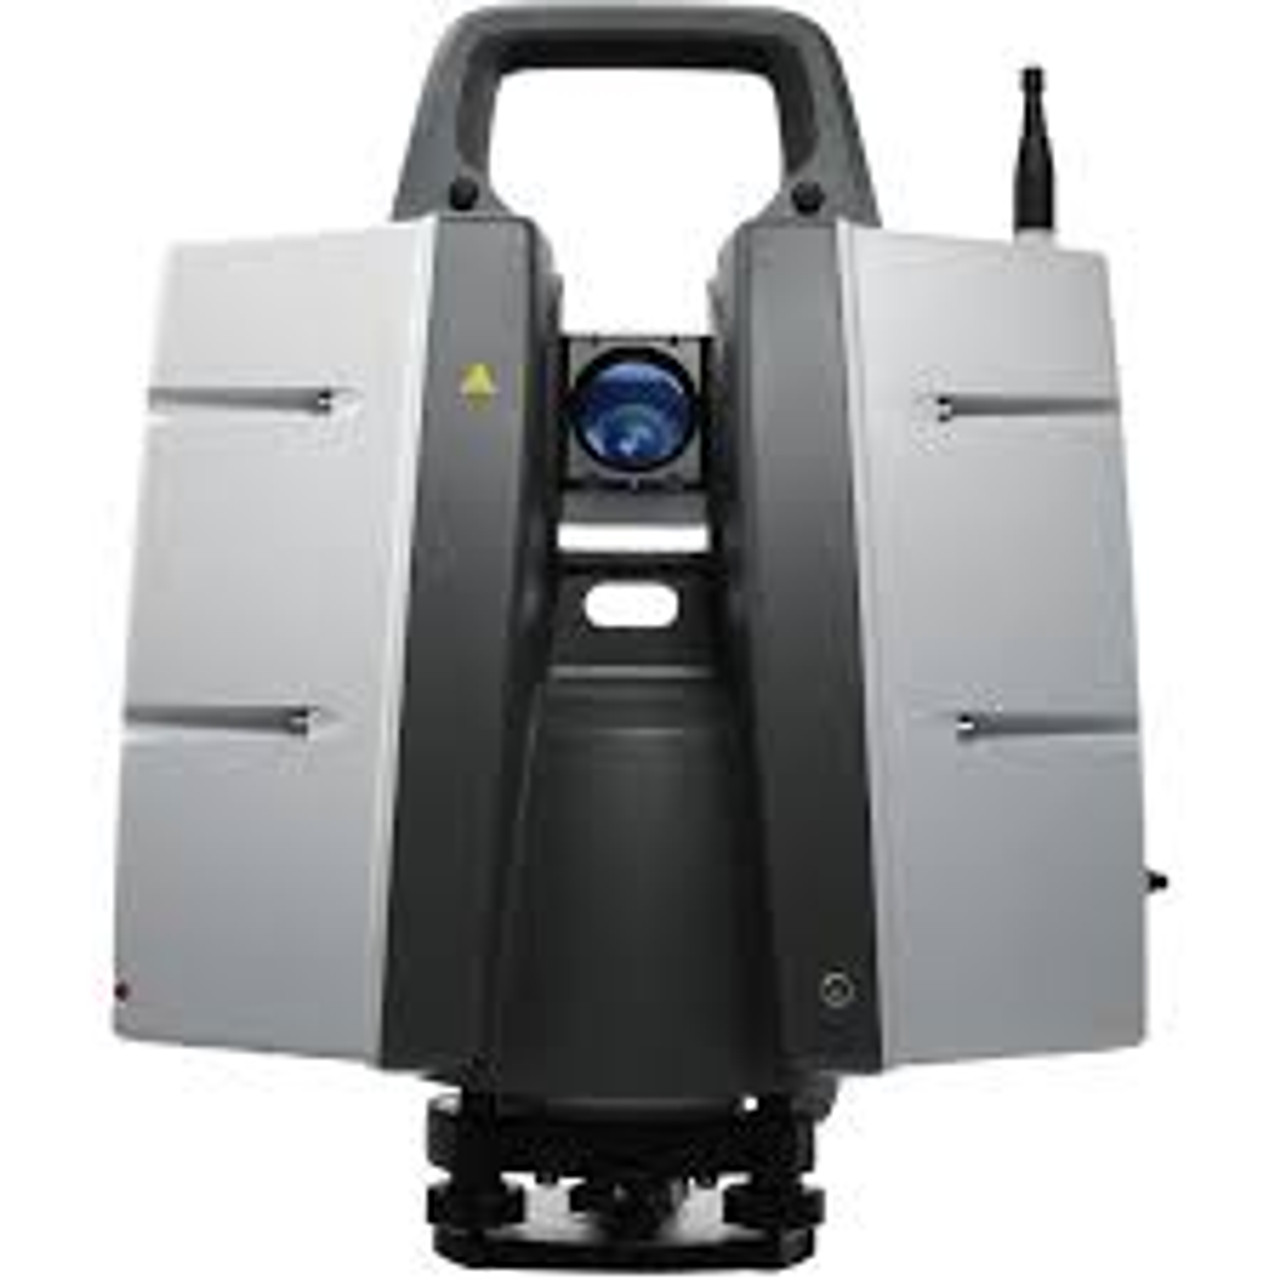 Leica ScanStation P30 lease $1,690 per mo